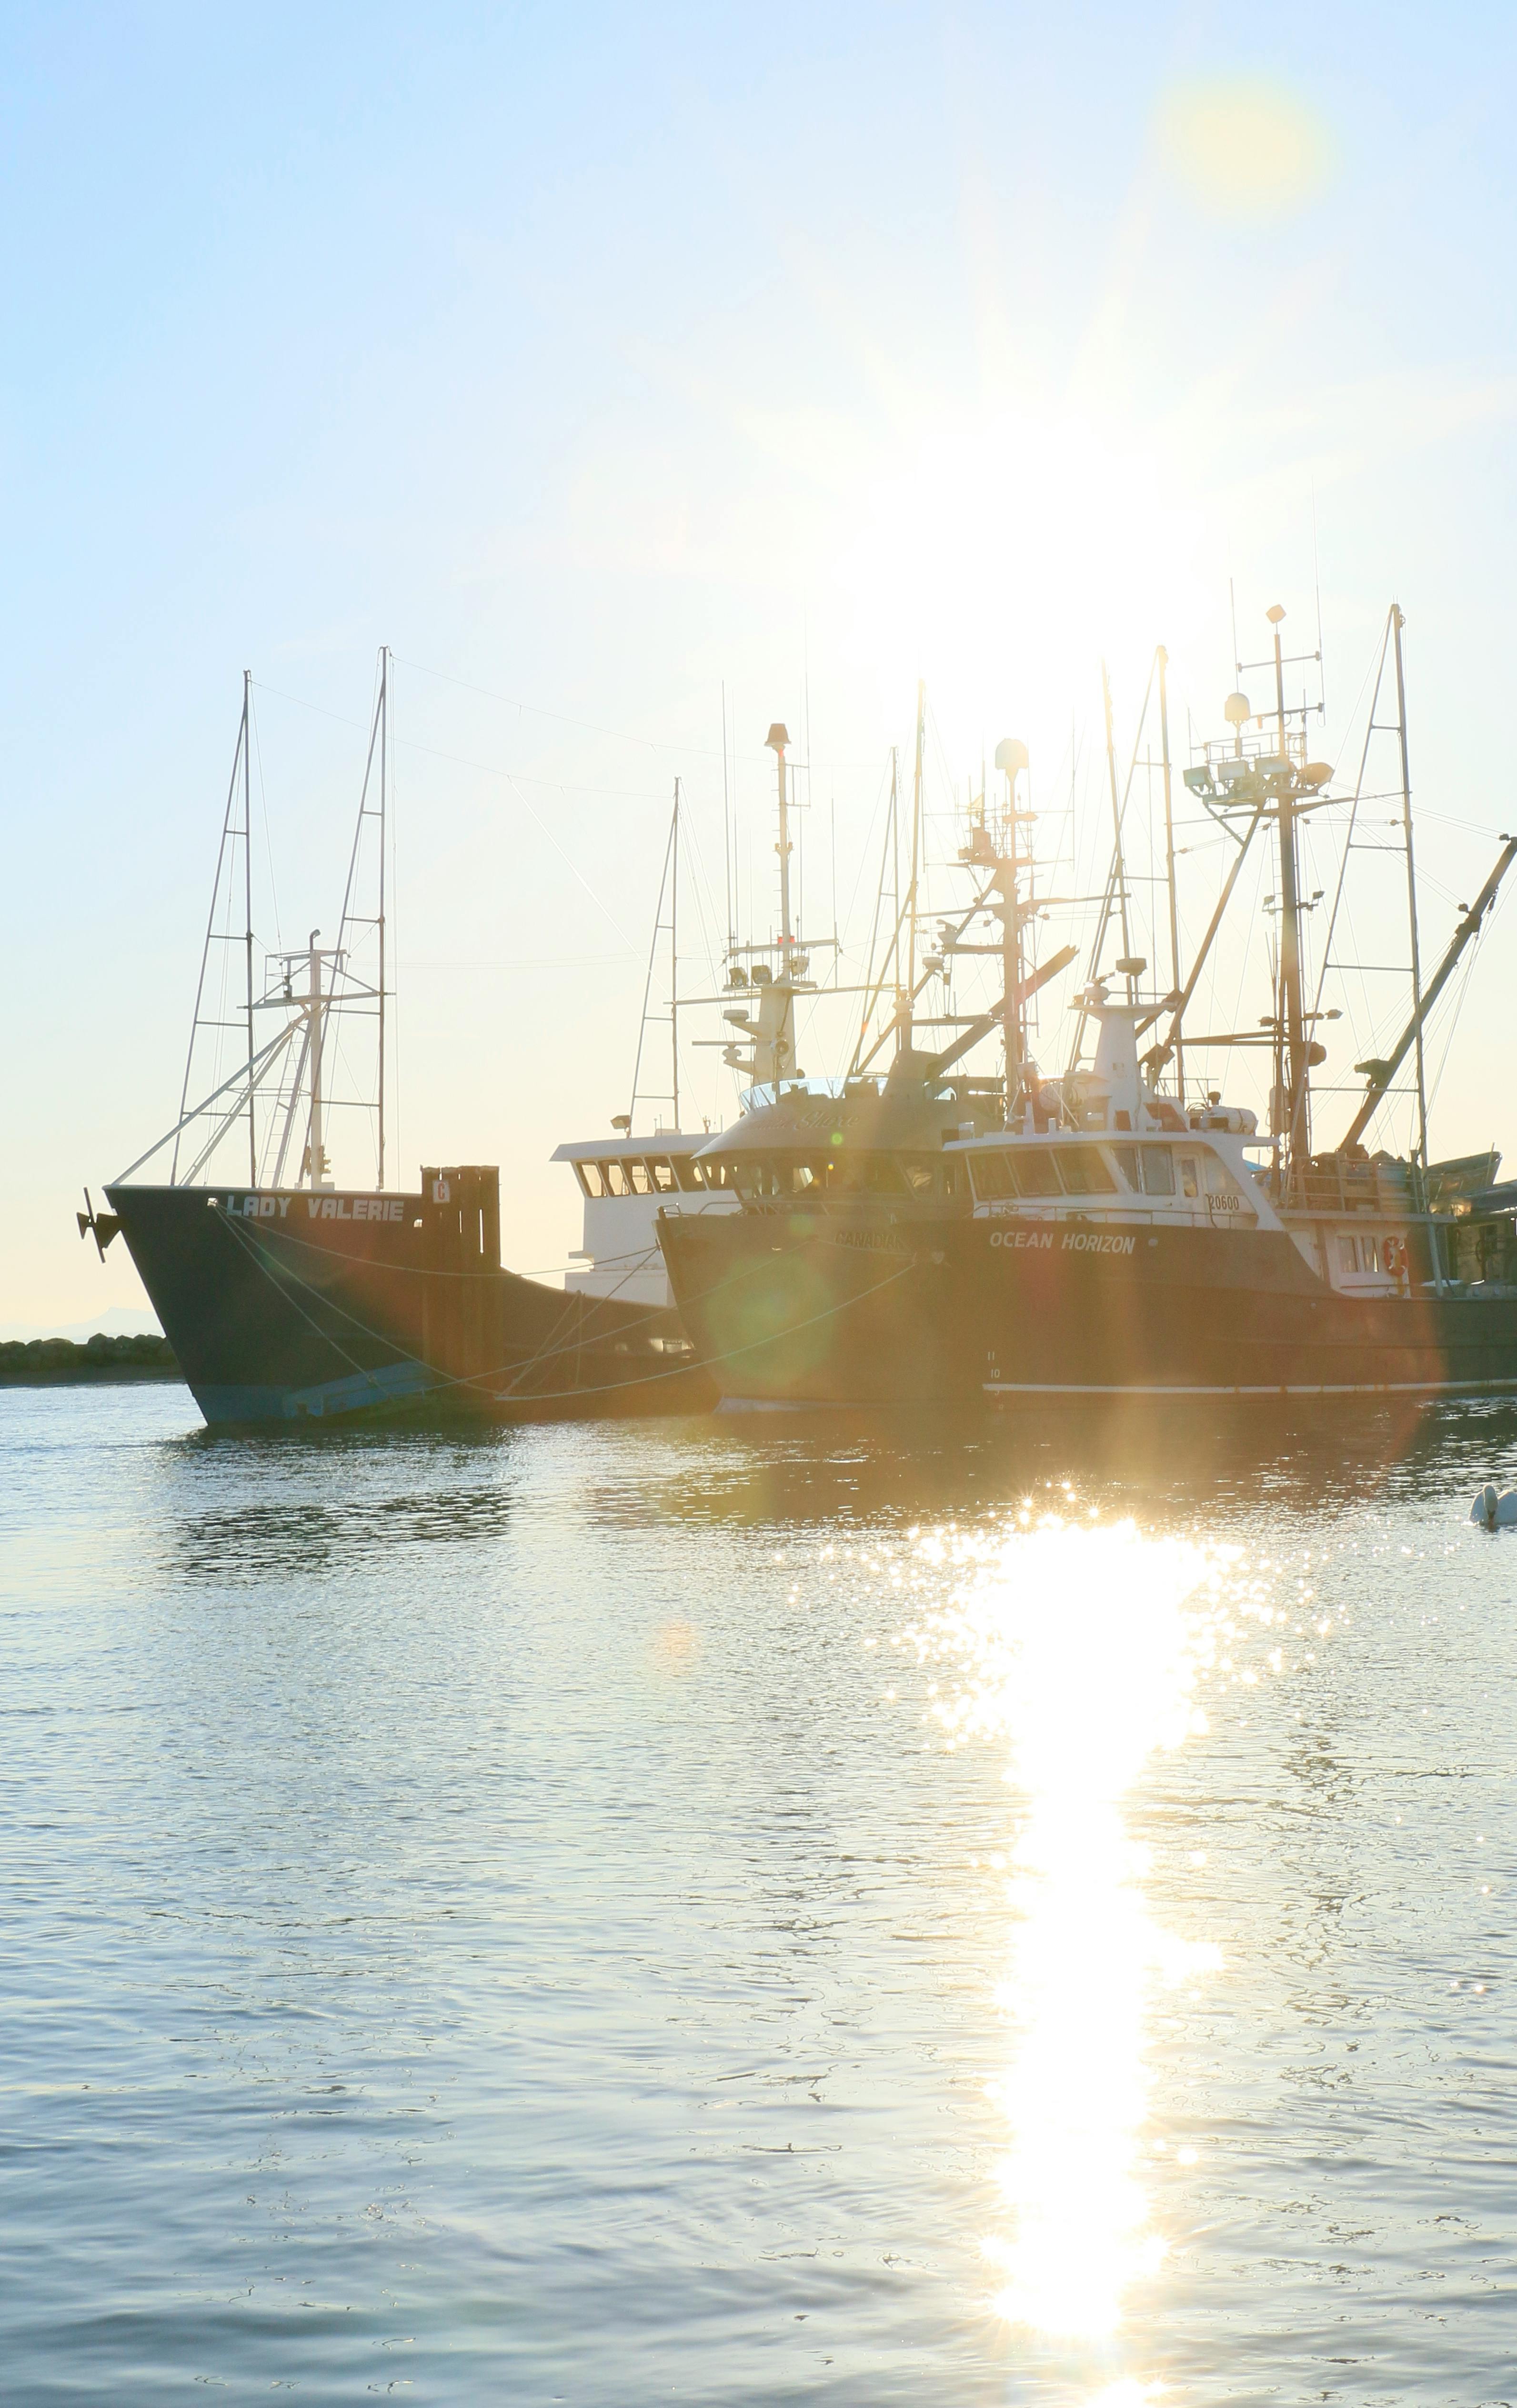 Free stock photo of fishing boats ocean sun inlets ocean scene